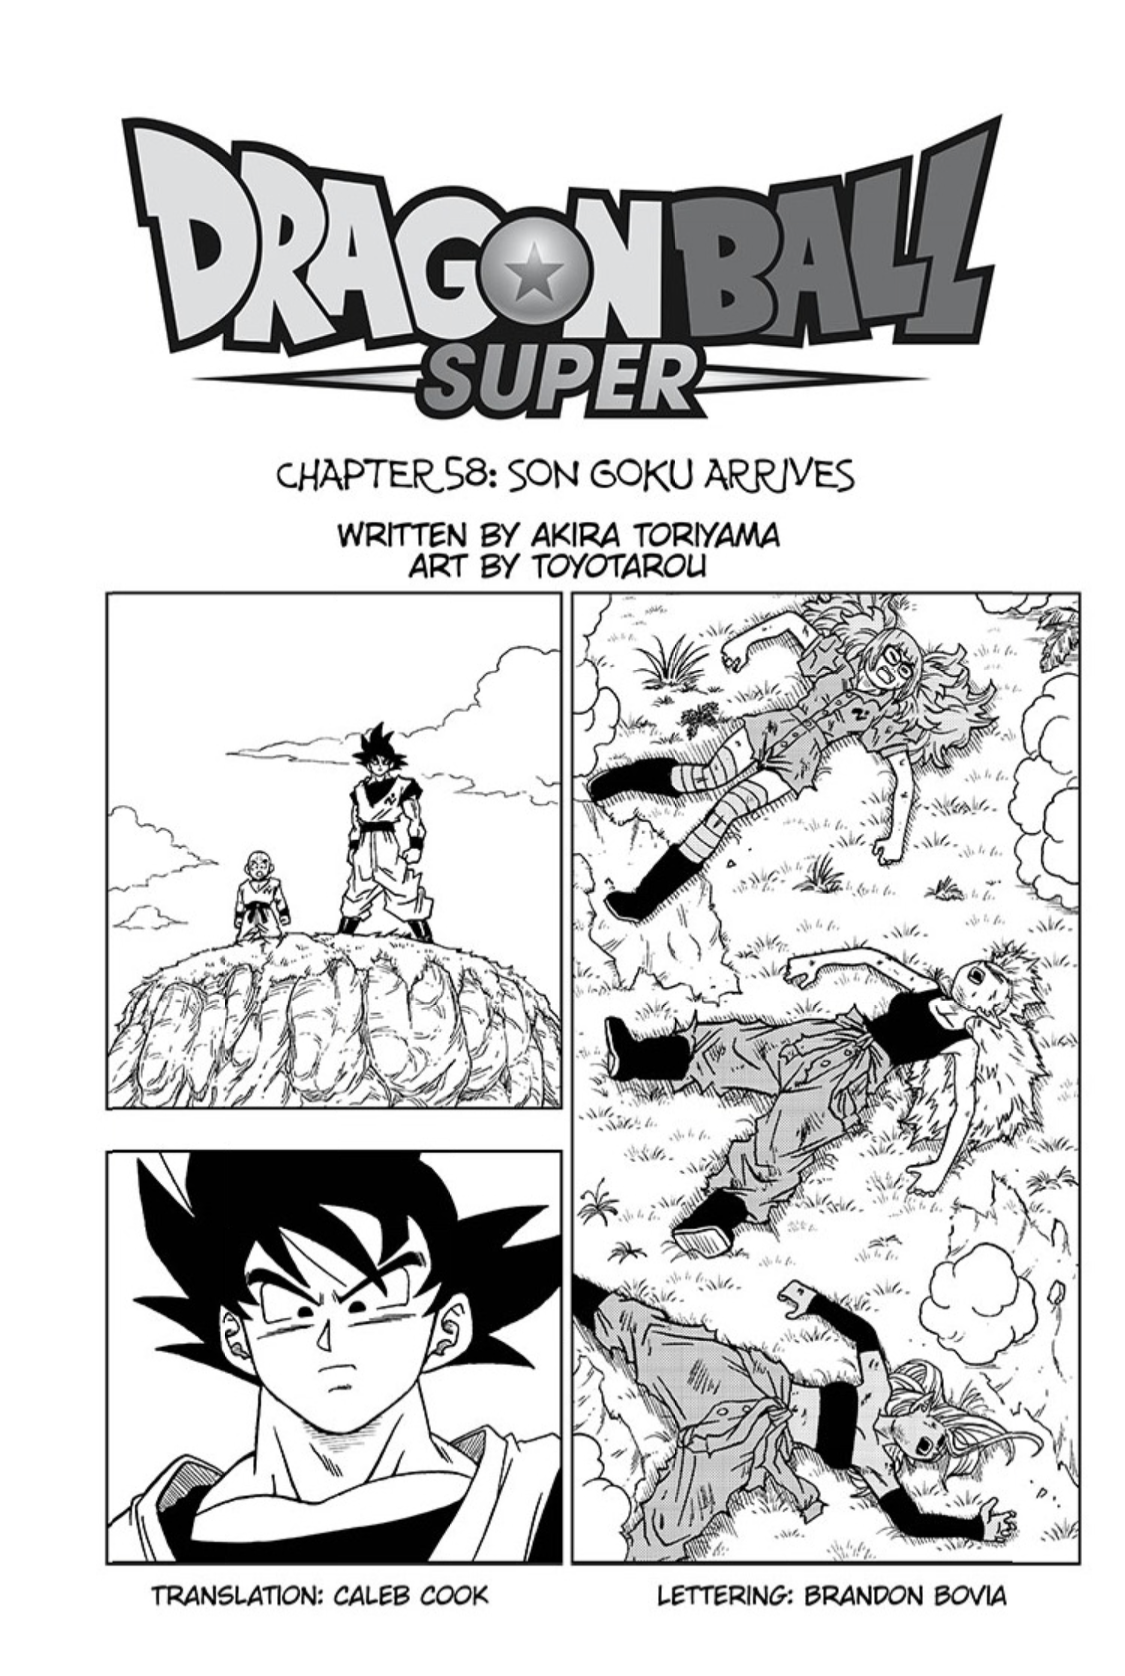 DRAGON BALL Super Vol.20 / Japanese Manga Book Comic Japan New